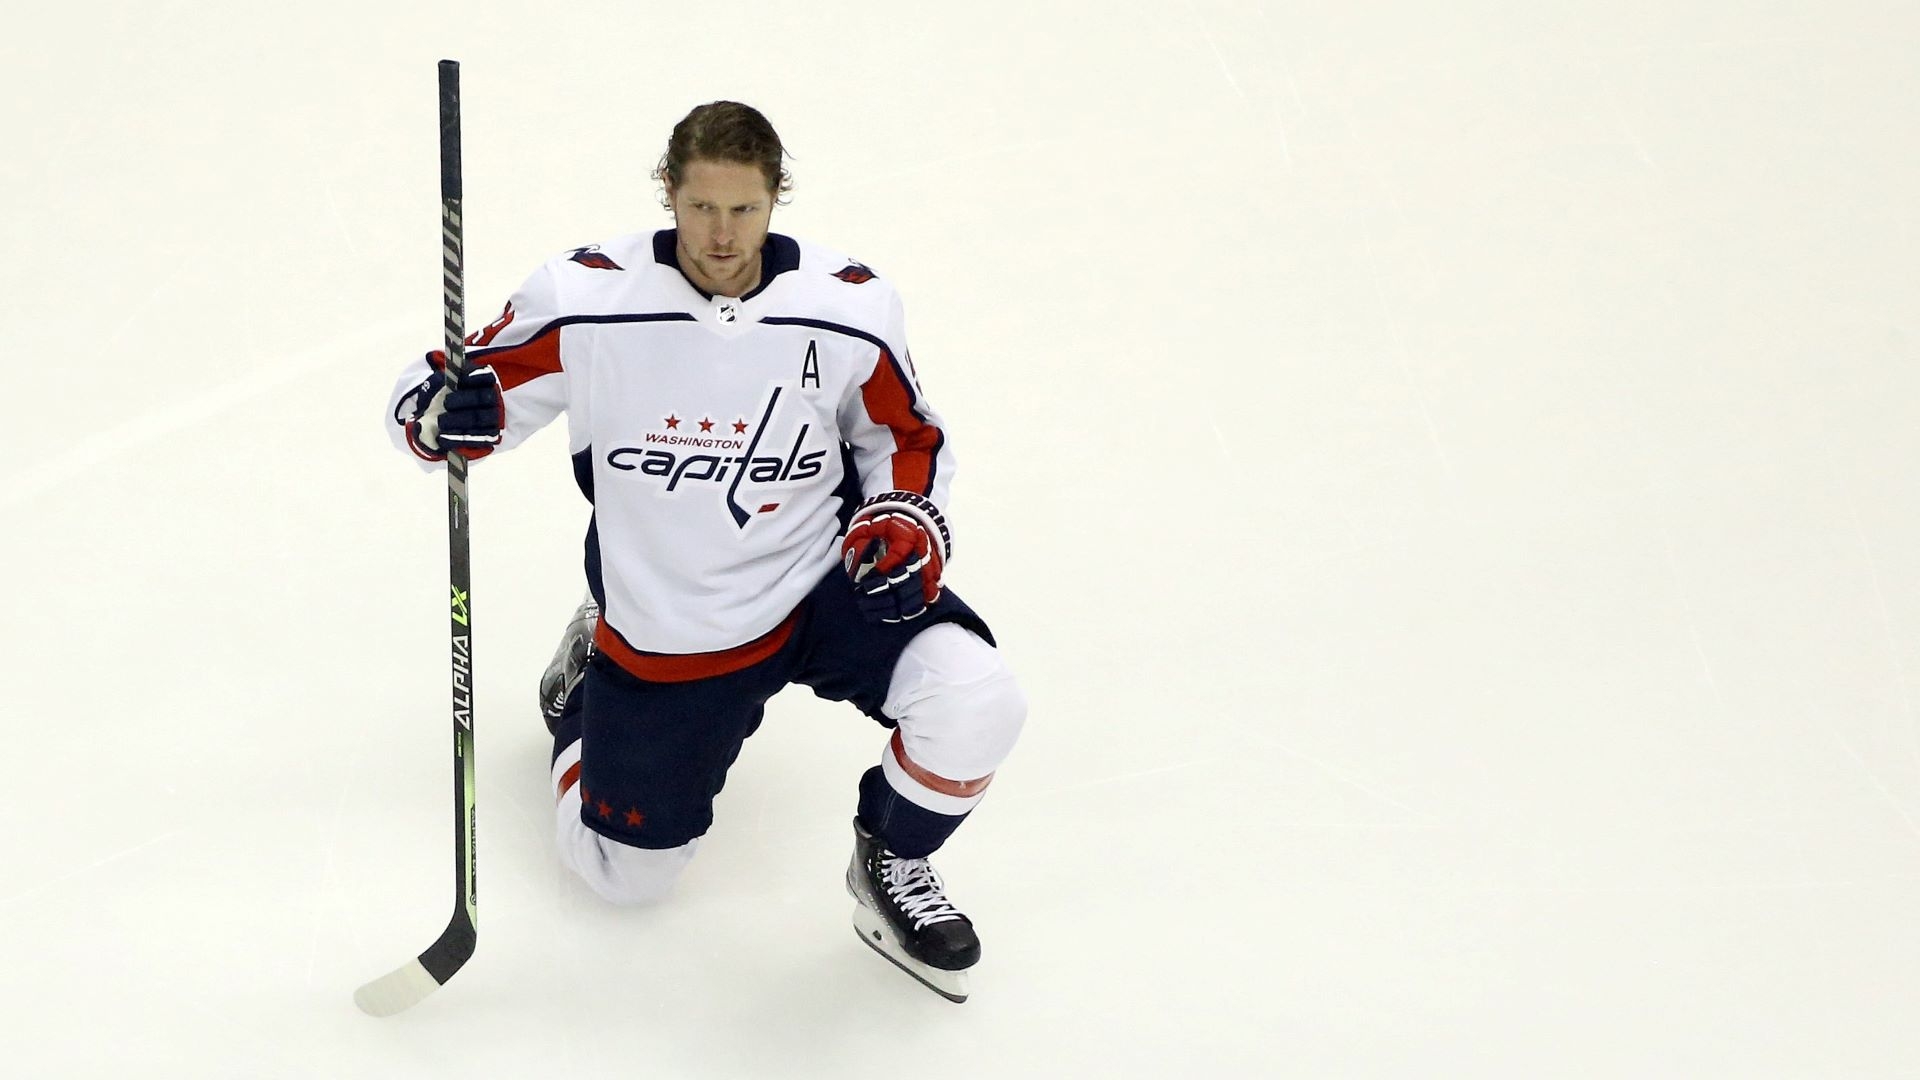 Nicklas Backstrom Hockey Player A Swedish For Washington Capitals